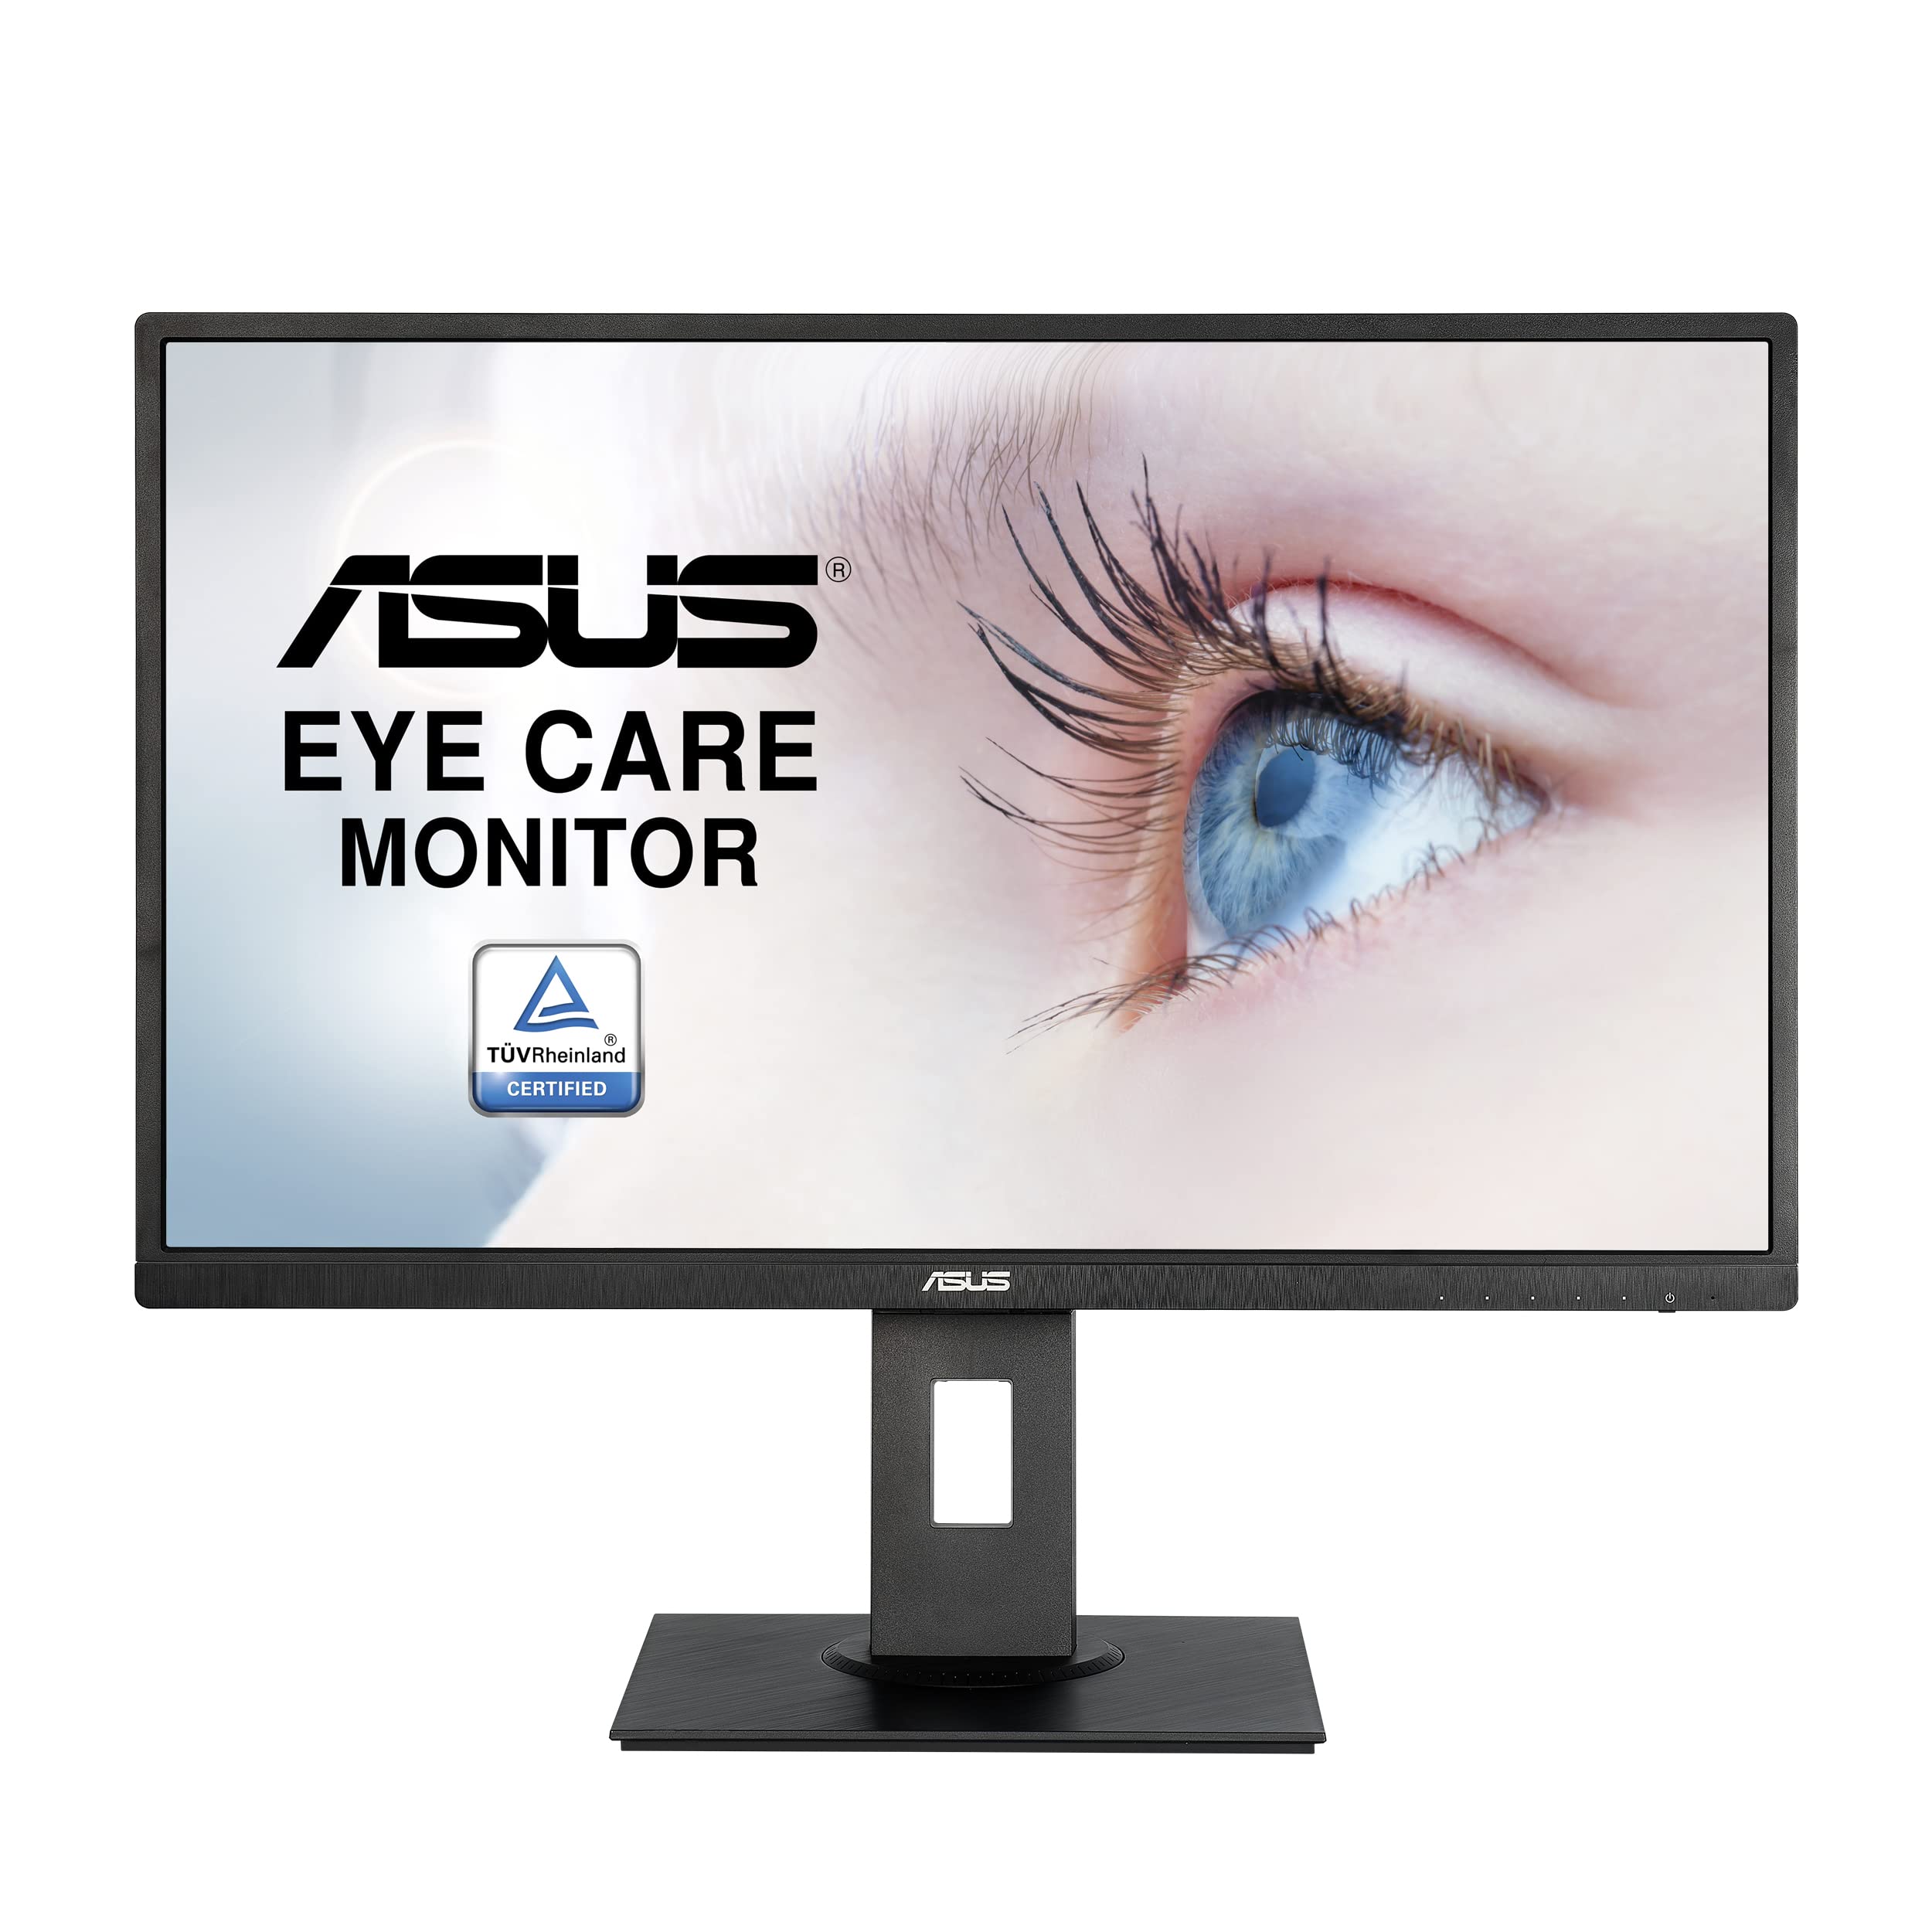 Asus 27 1080P 显示器 (VA279HAL) - 全高清、内置扬声器、护眼、低蓝光、无闪烁、VES...